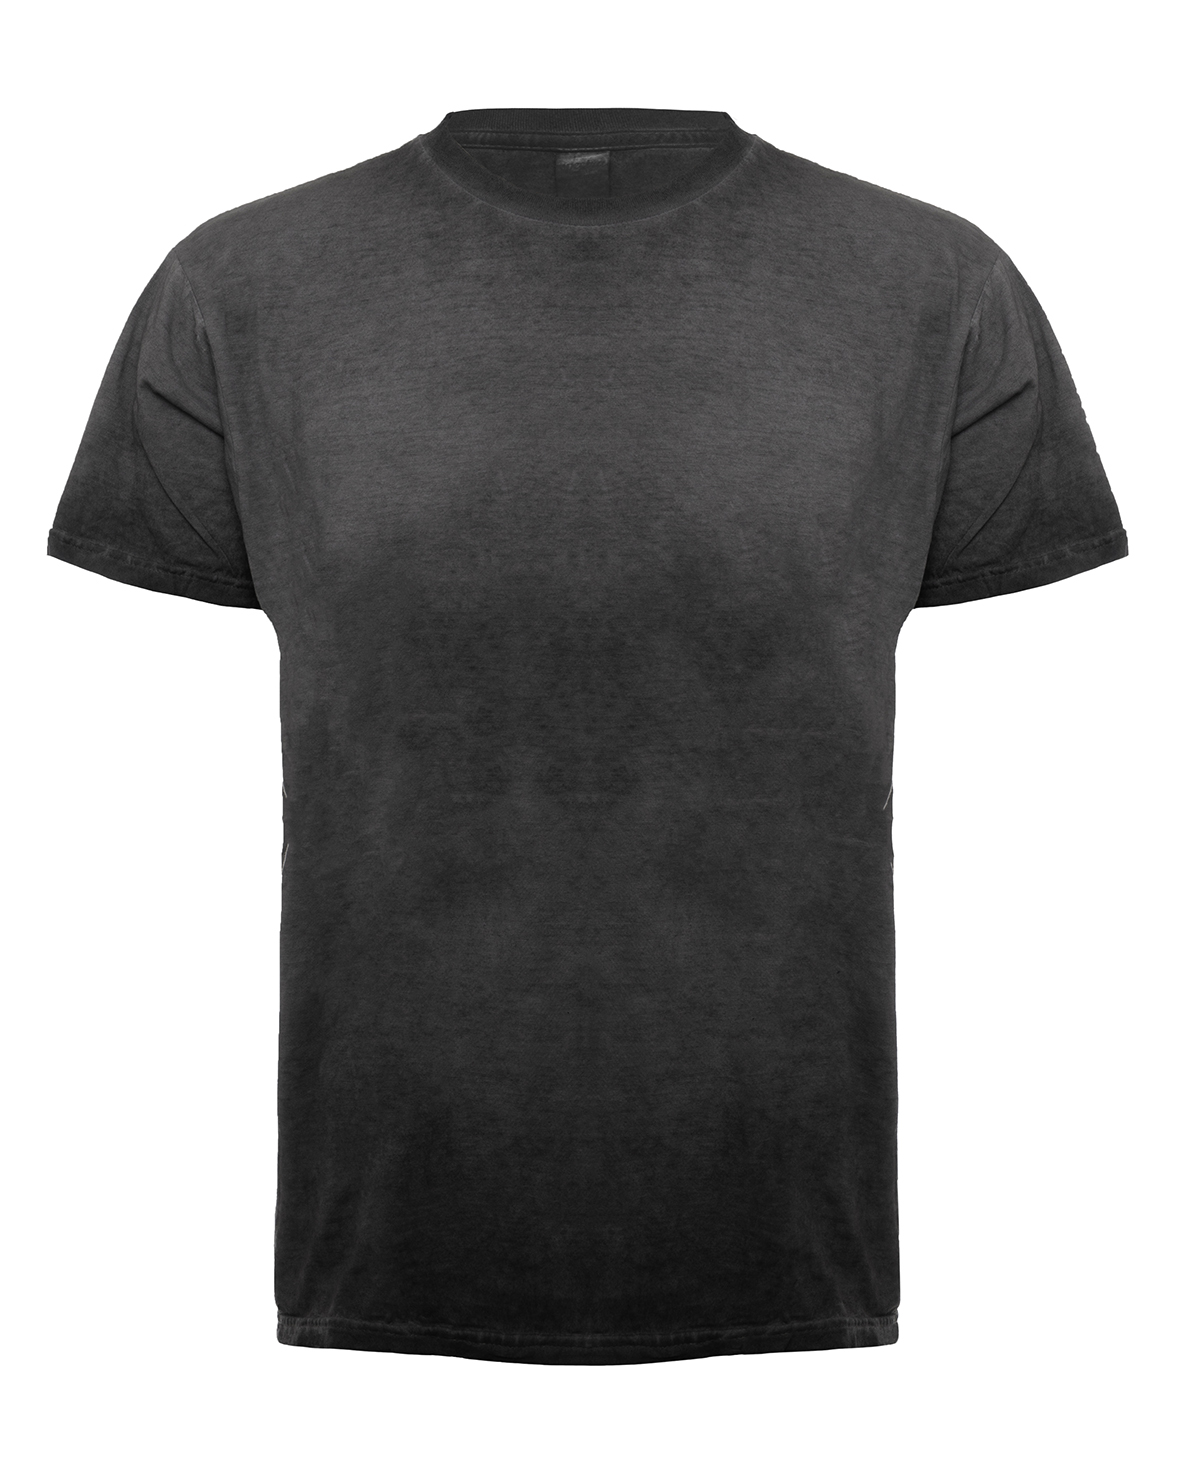 31 Oilwash Granite Front T-shirt